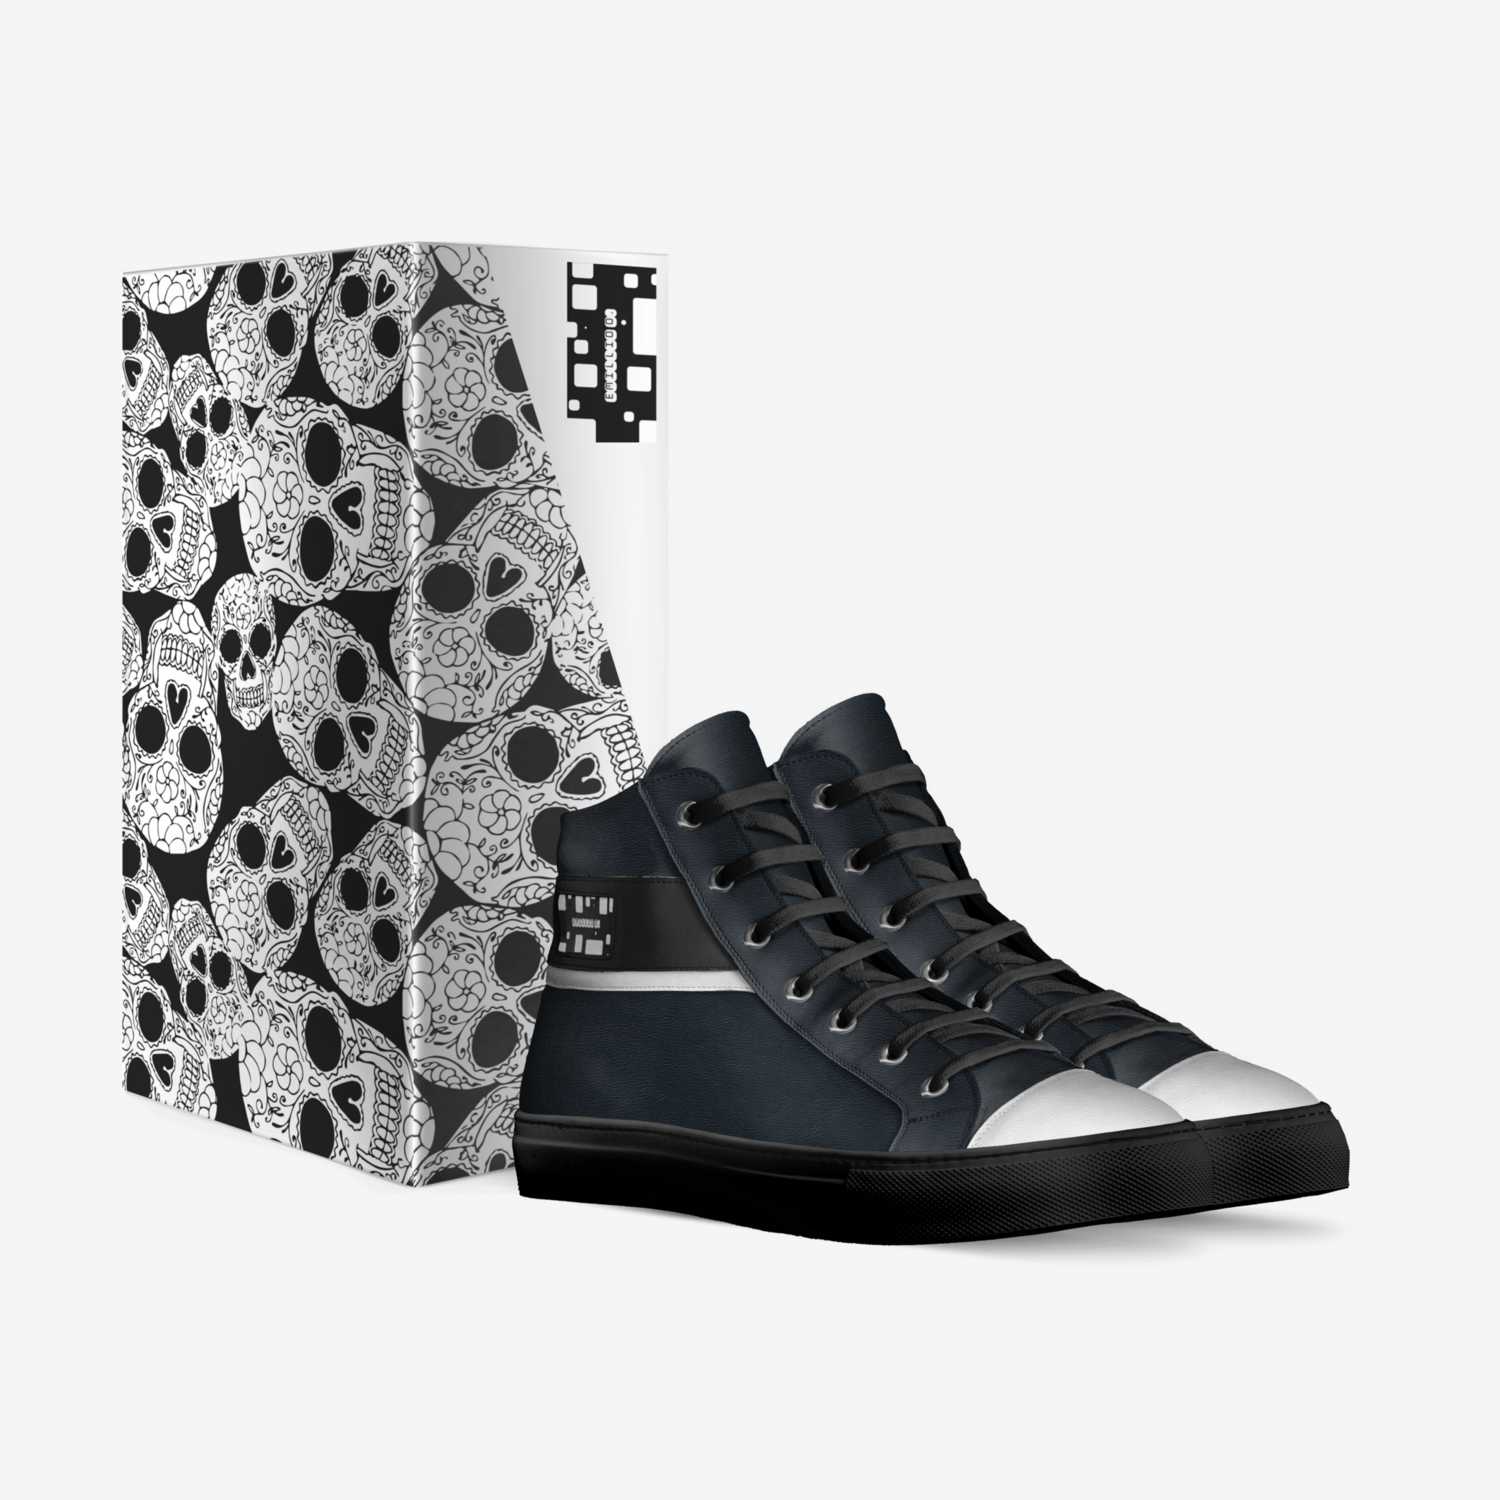 Emillio O.  custom made in Italy shoes by Emillio O. | Box view